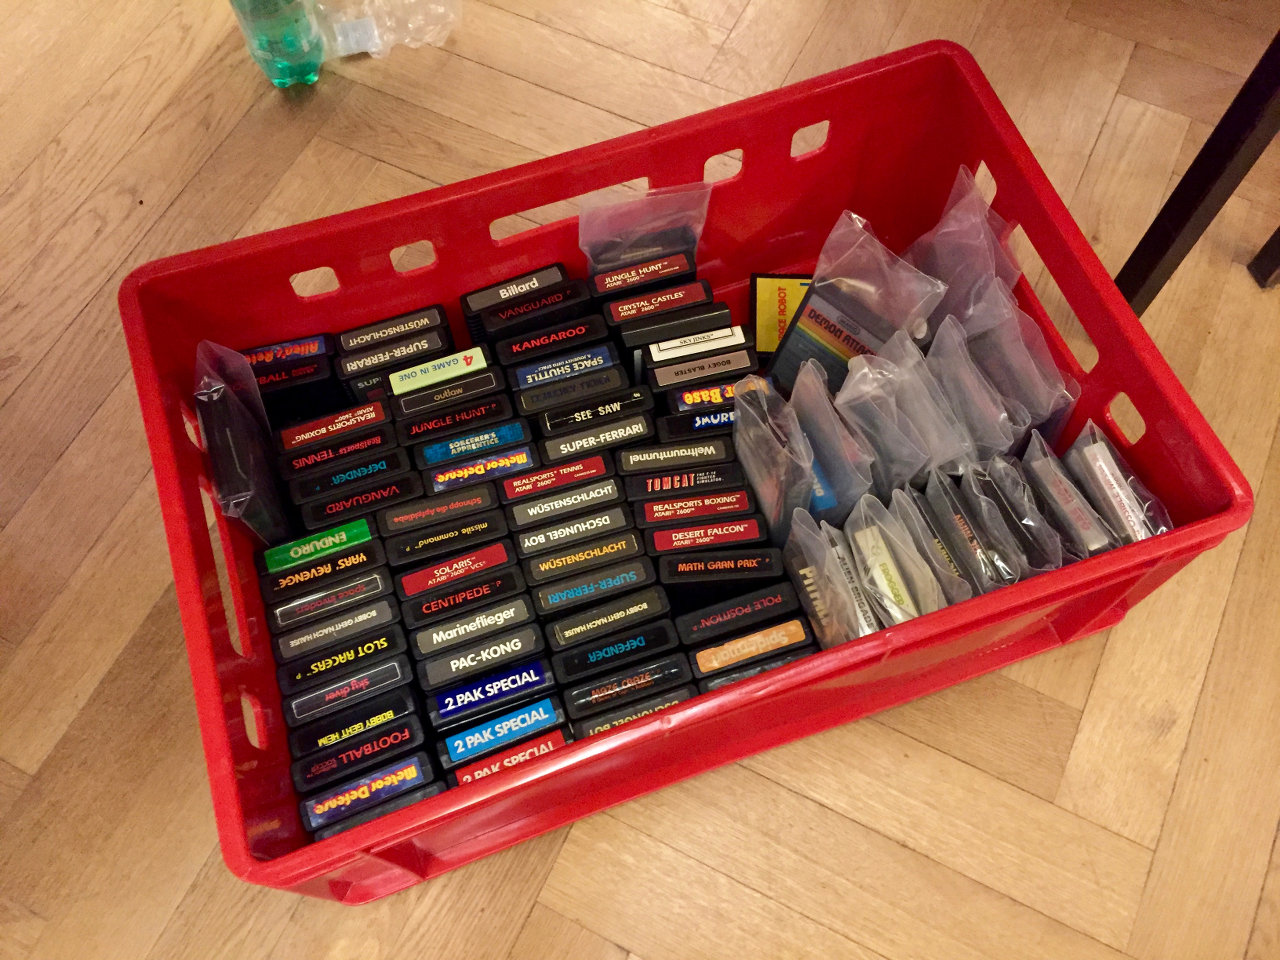 Wäschekörbe voller Atari VCS Module. (Bild: André Eymann)